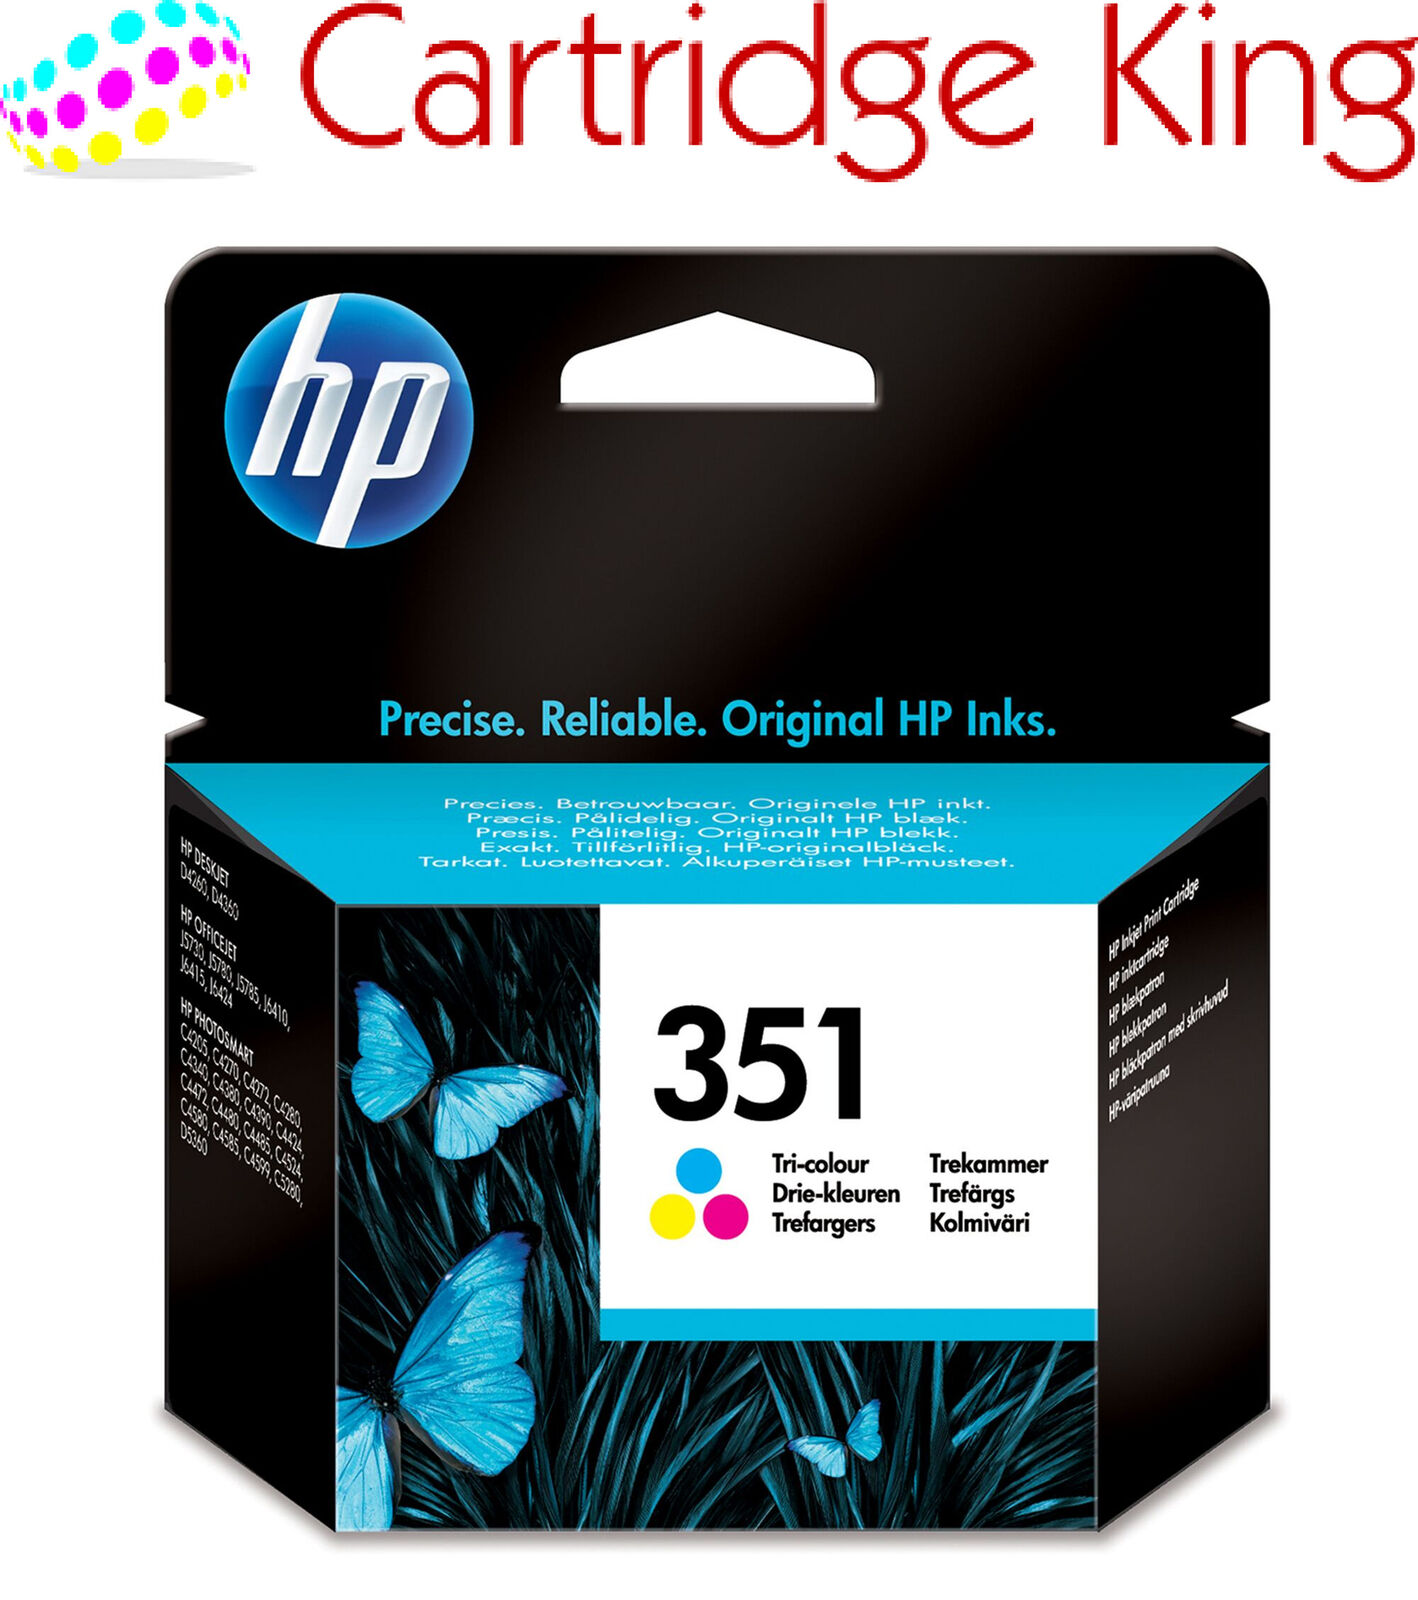 HP 351 Tri-colour Original Ink Cartridge for HP Photosmart C4585 Printer